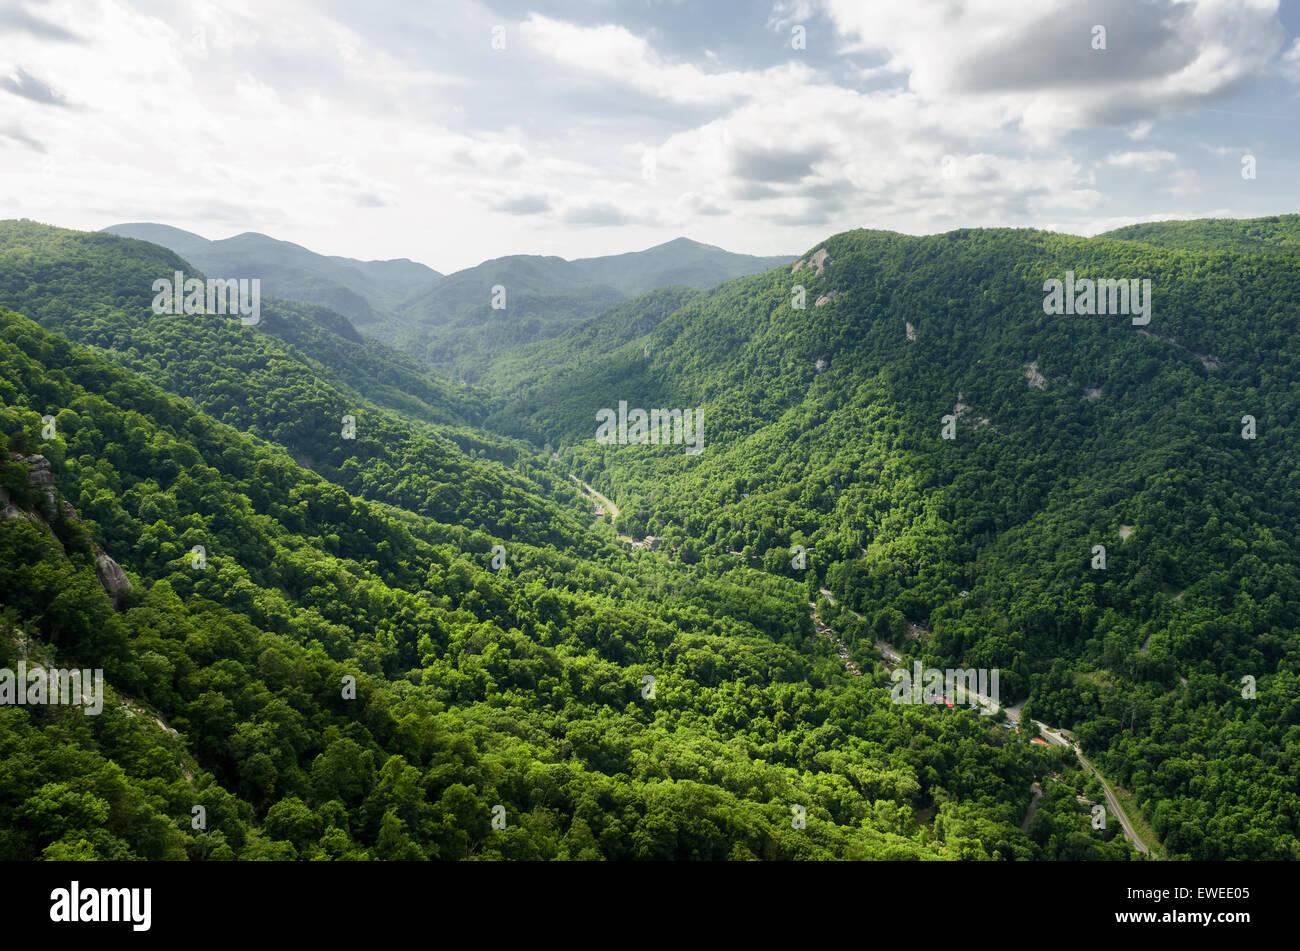 Overlook from chimney rock mountain, North Carolina, United States Stock Photo